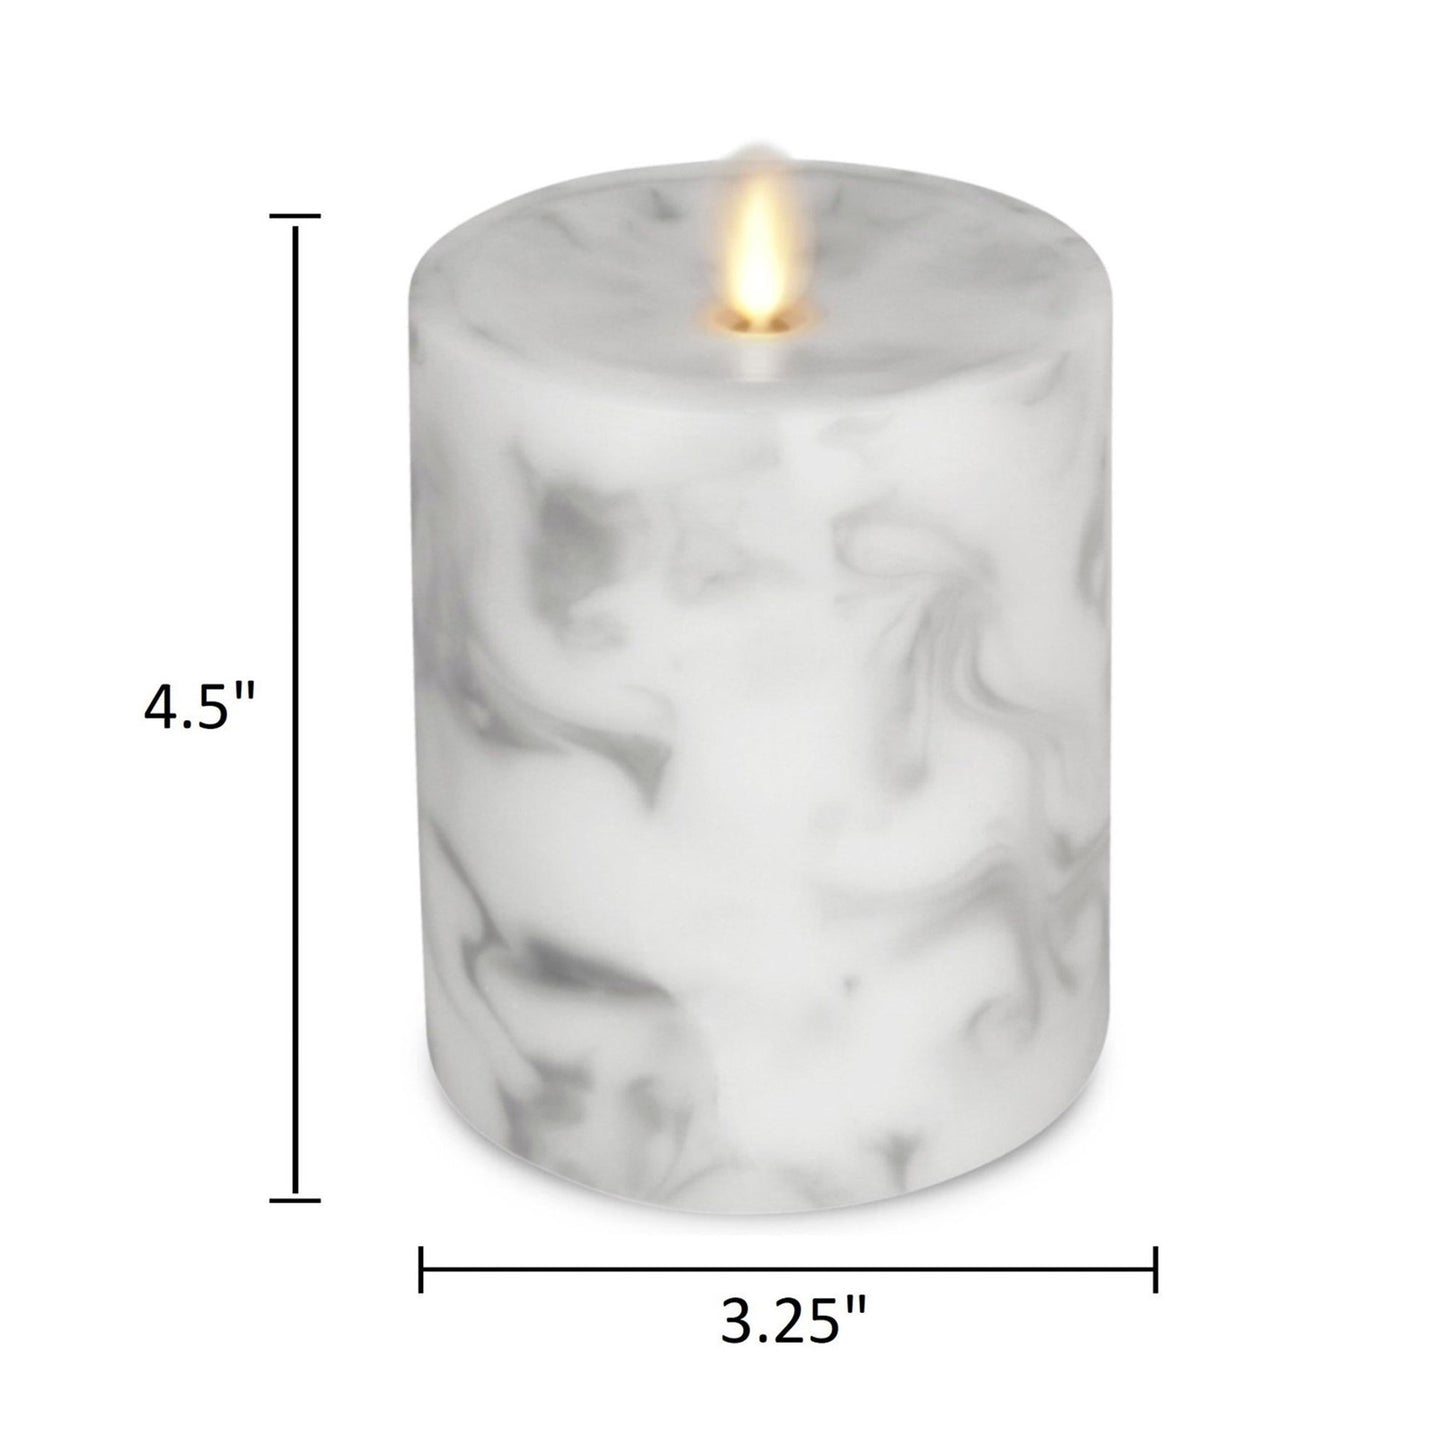 Luminara's Flameless Marble Candle